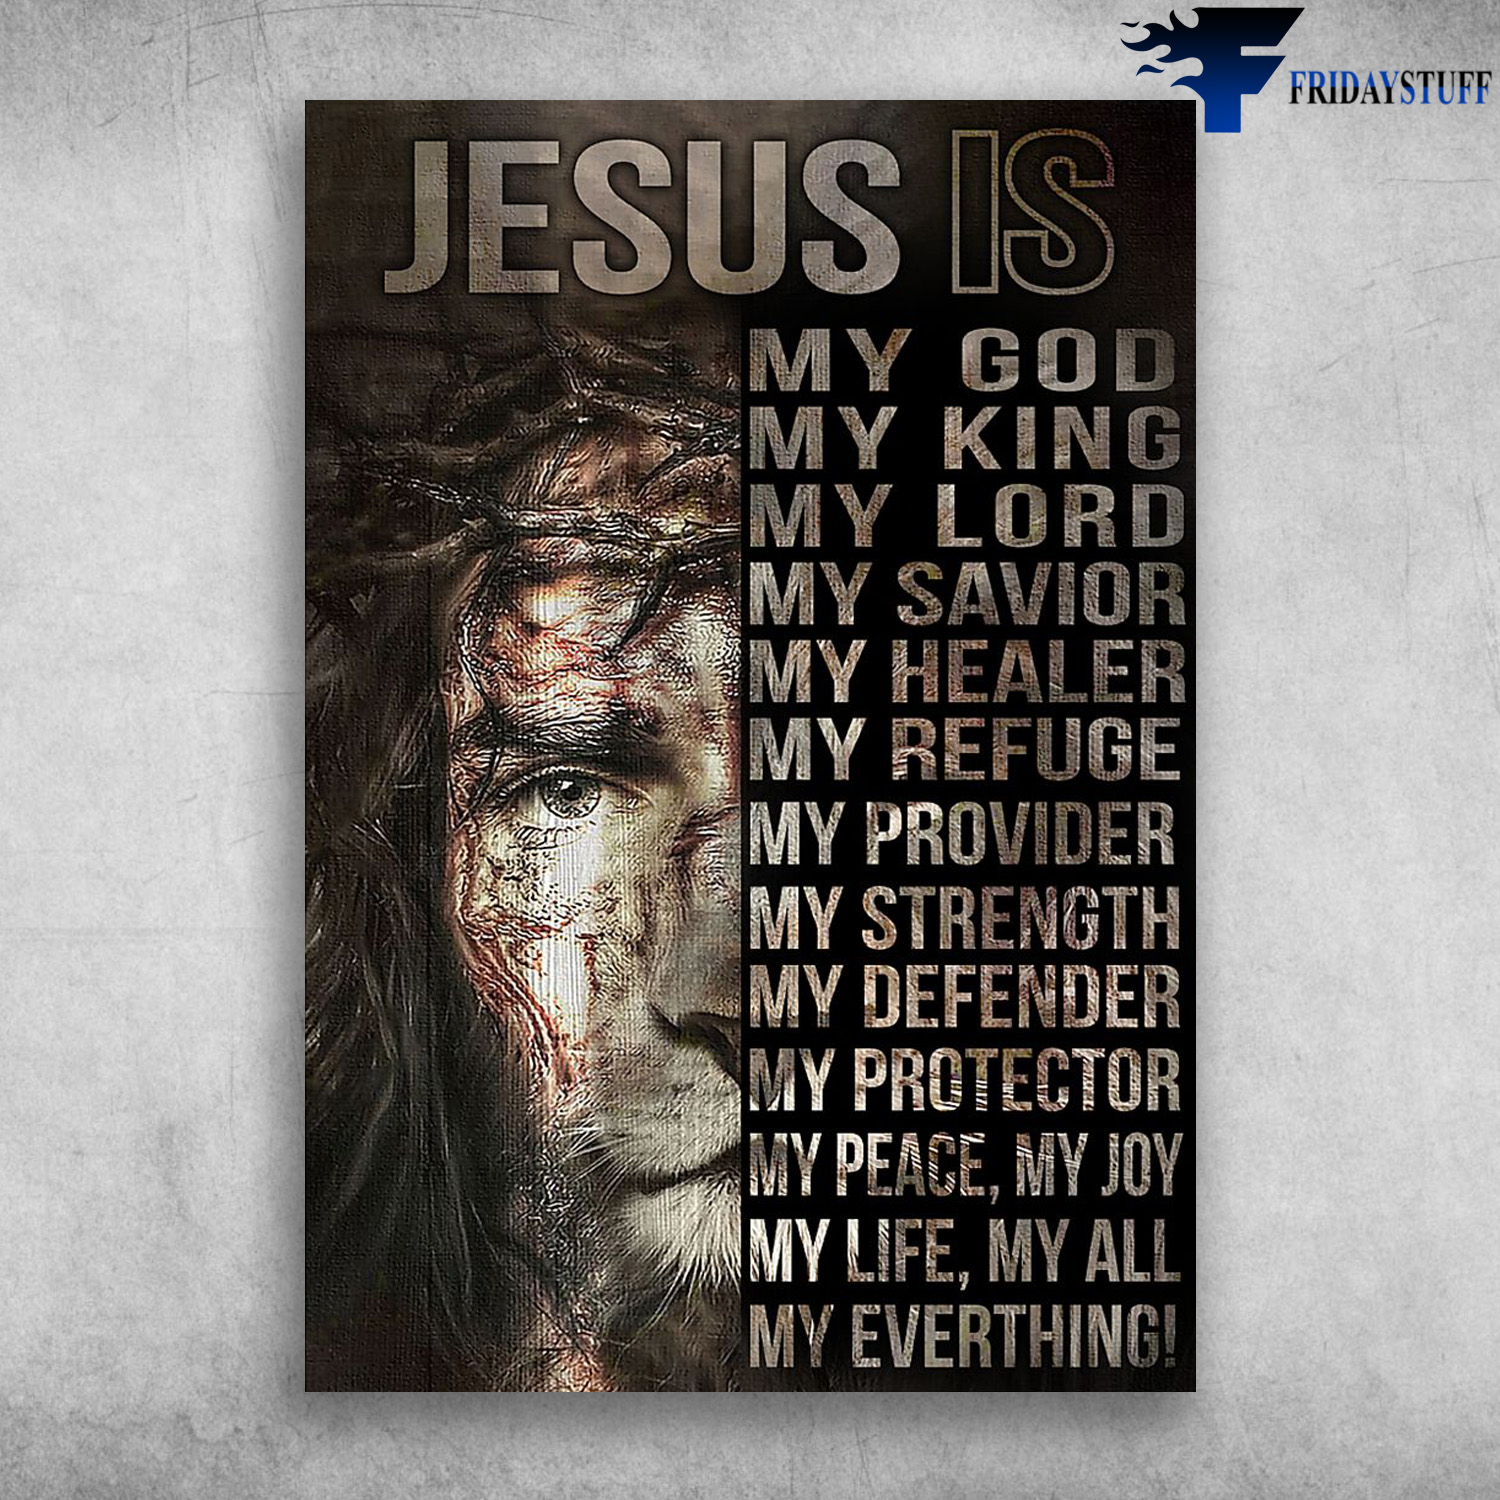 God, Lion - Jesus Is My God, My King, My Lord, My Savior, My Healer, My Refuge, My Provider, My Strength, My Defender, My Protector, My Peace, My Joy, My Life, My All, My Everything